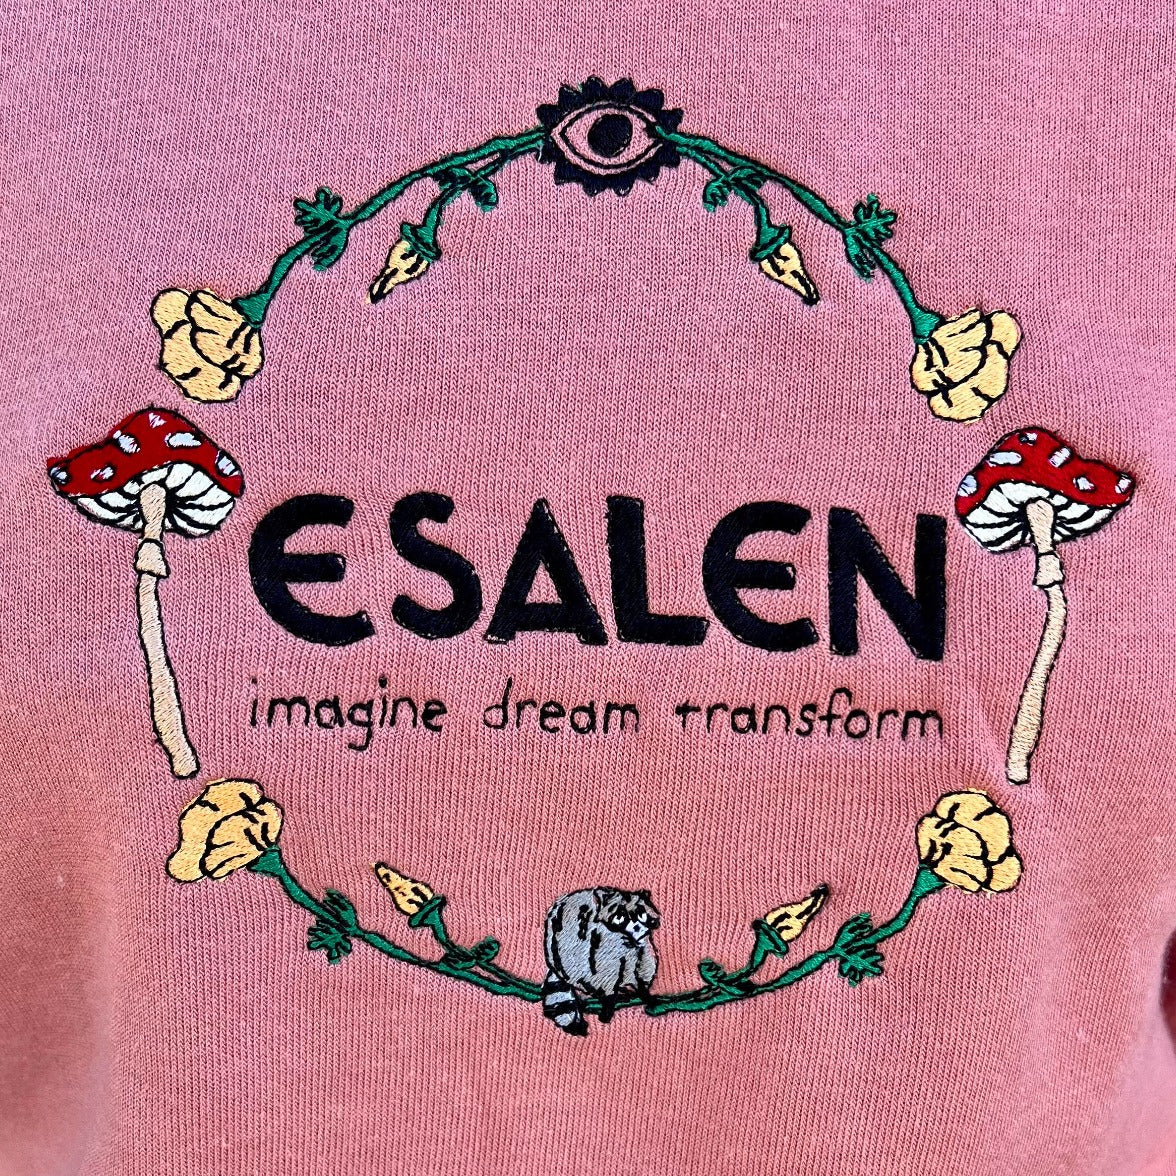 Imagine Dream Transform Circle Sweatshirt in Clay by Esalen x C.Bonz